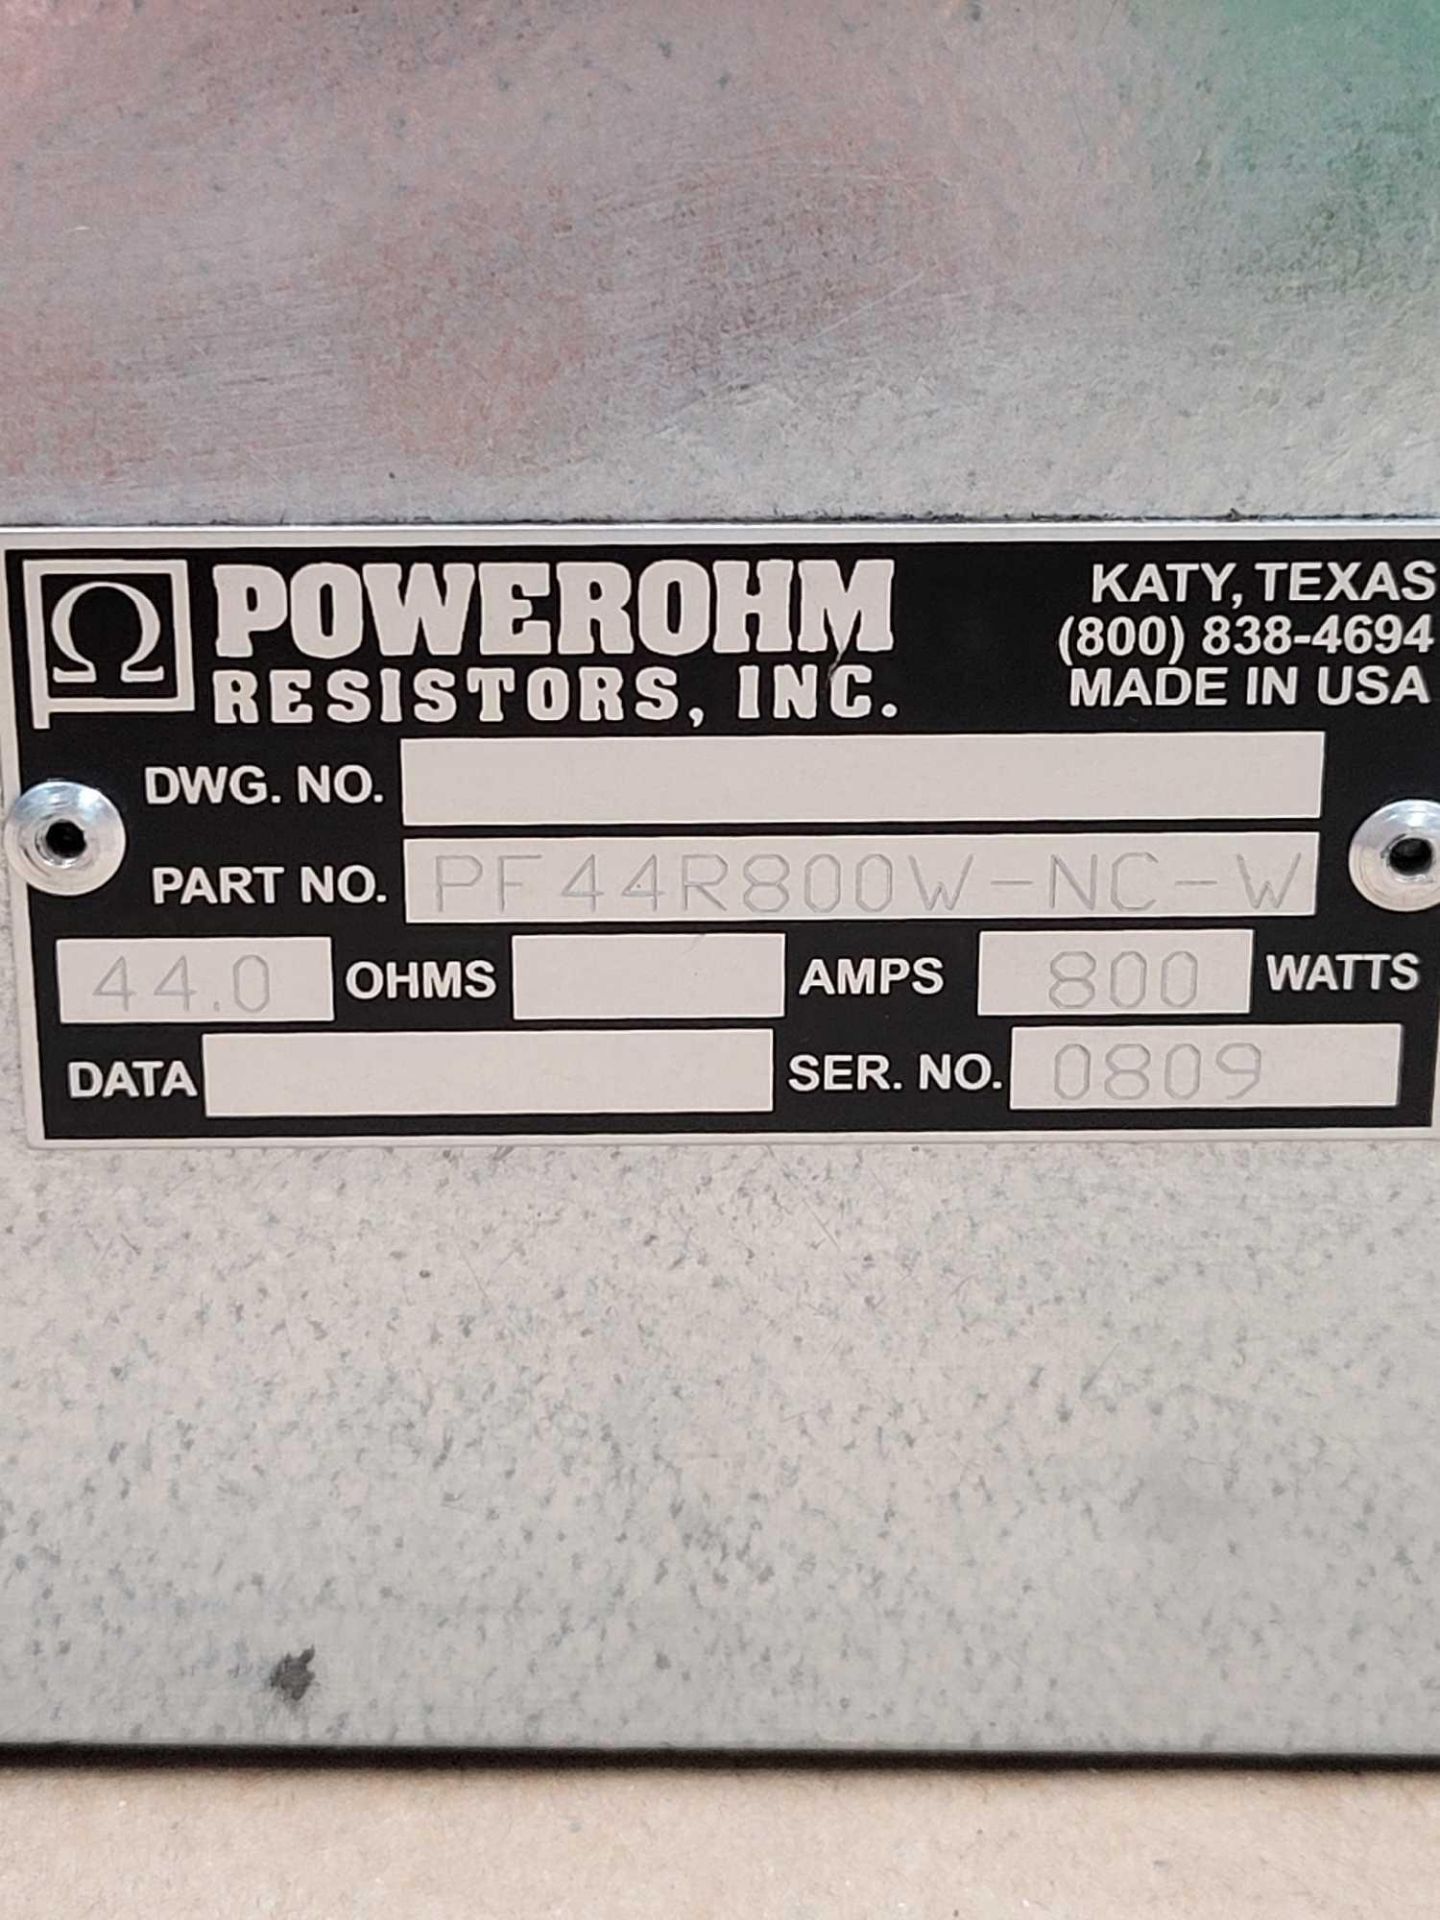 LOT OF 2 POWEROHM PF44R800W-NC-W / Braking Resistor  /  Lot Weight: 15.8 lbs - Image 2 of 4